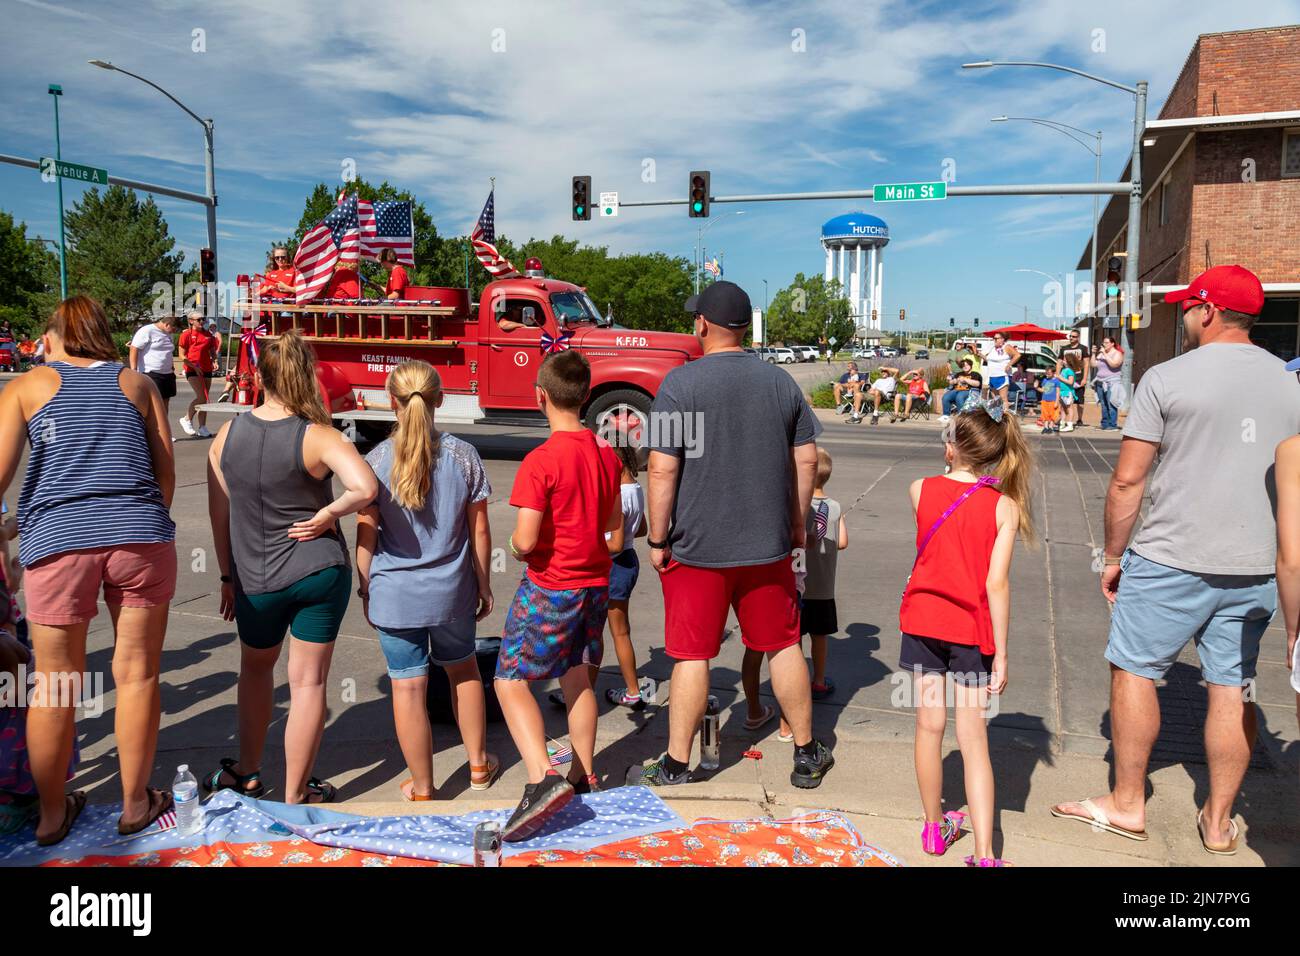 Hutchinson, Kansas - The annual July 4 'Patriots Parade' in rural Kansas. Stock Photo